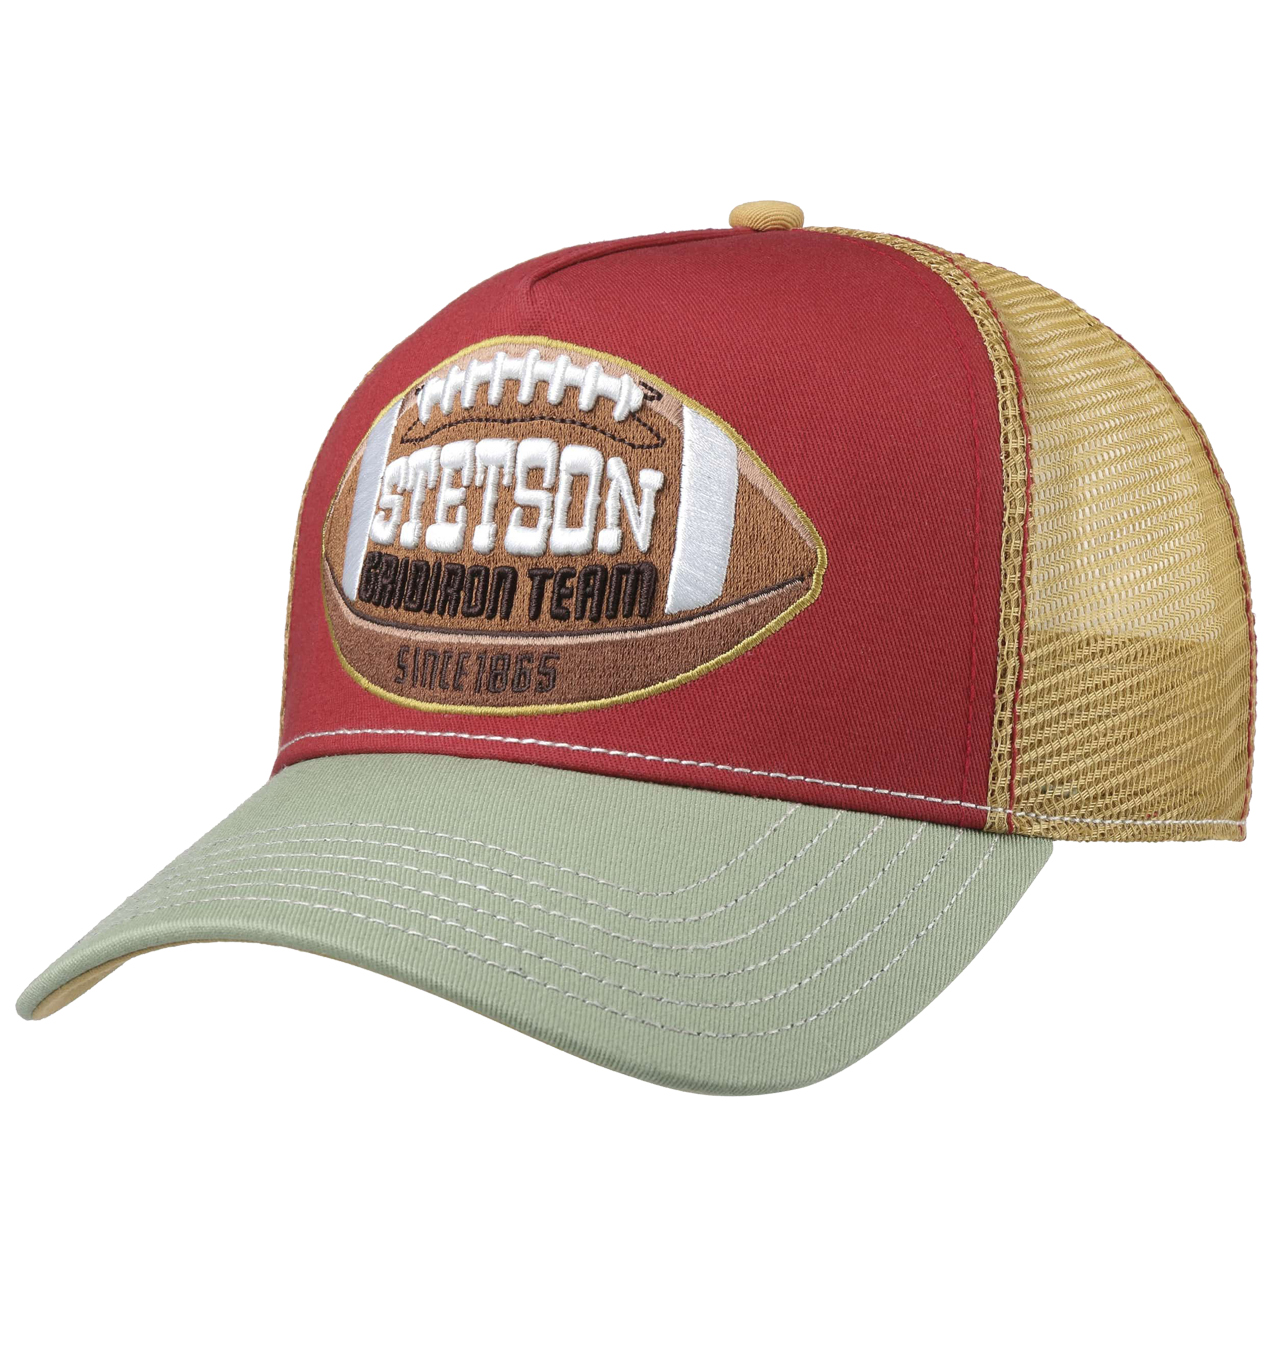 Stetson - College Football Trucker Cap - Red